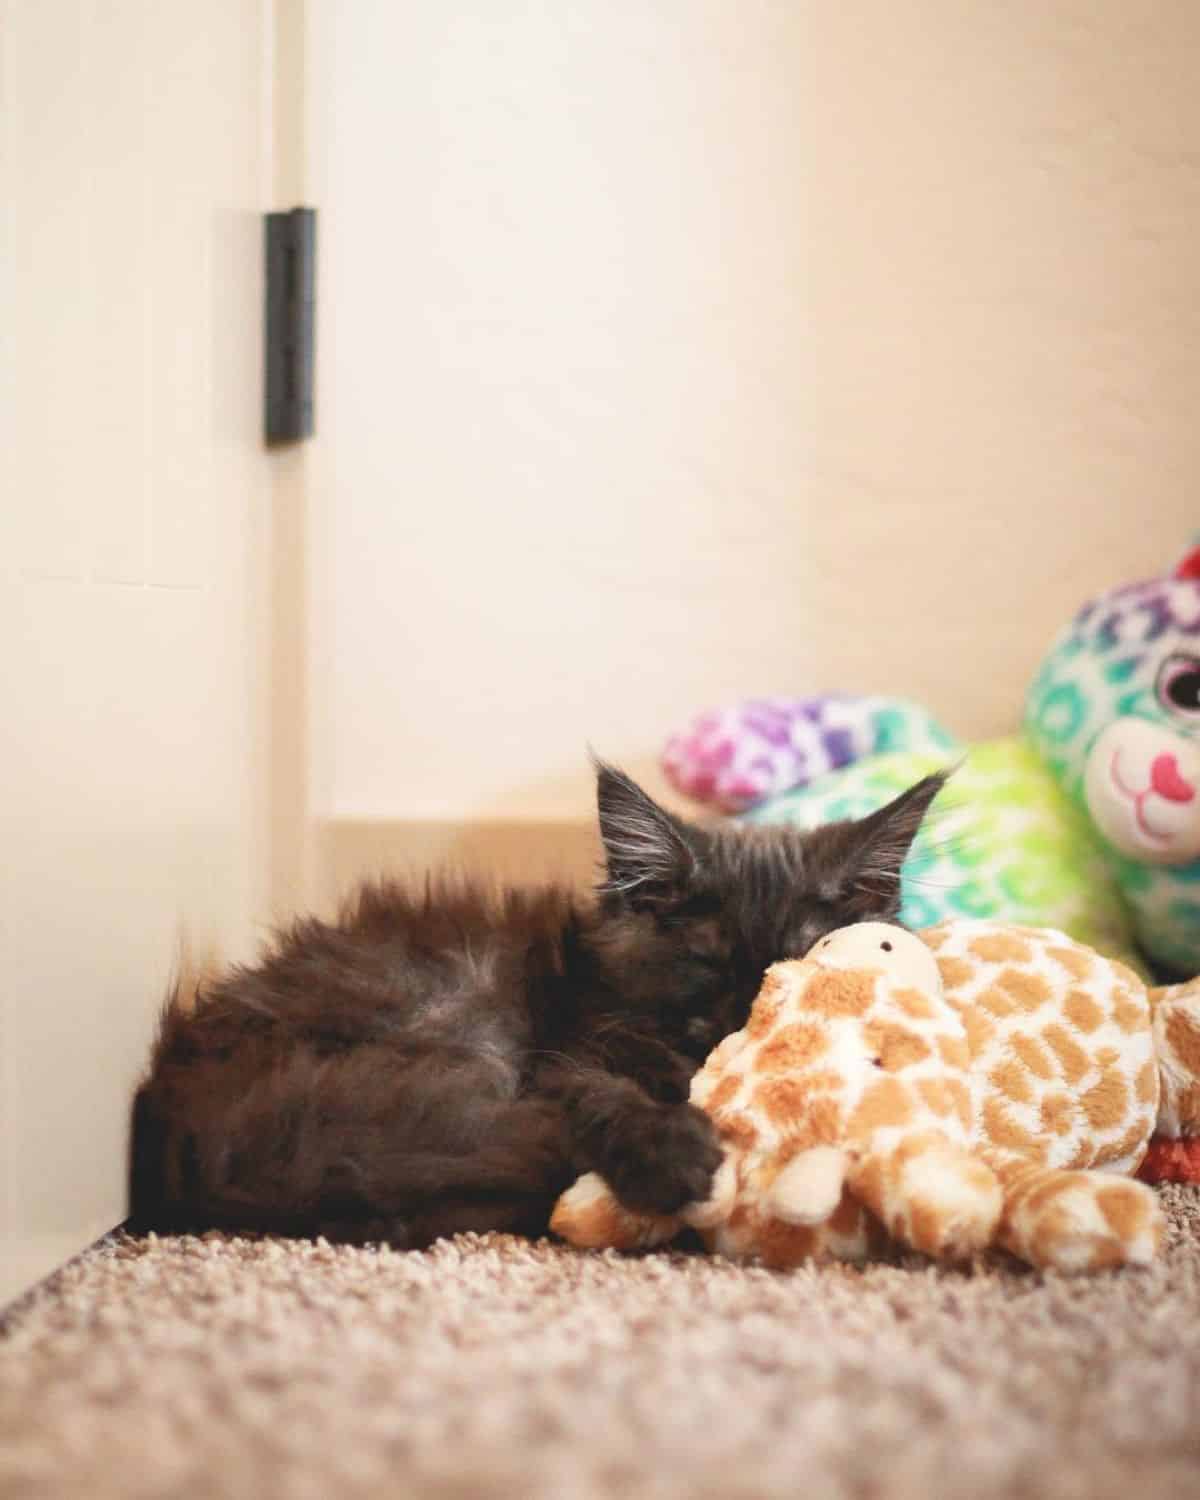 A cute black maine coon kitten sleeping on a stuffed toy.